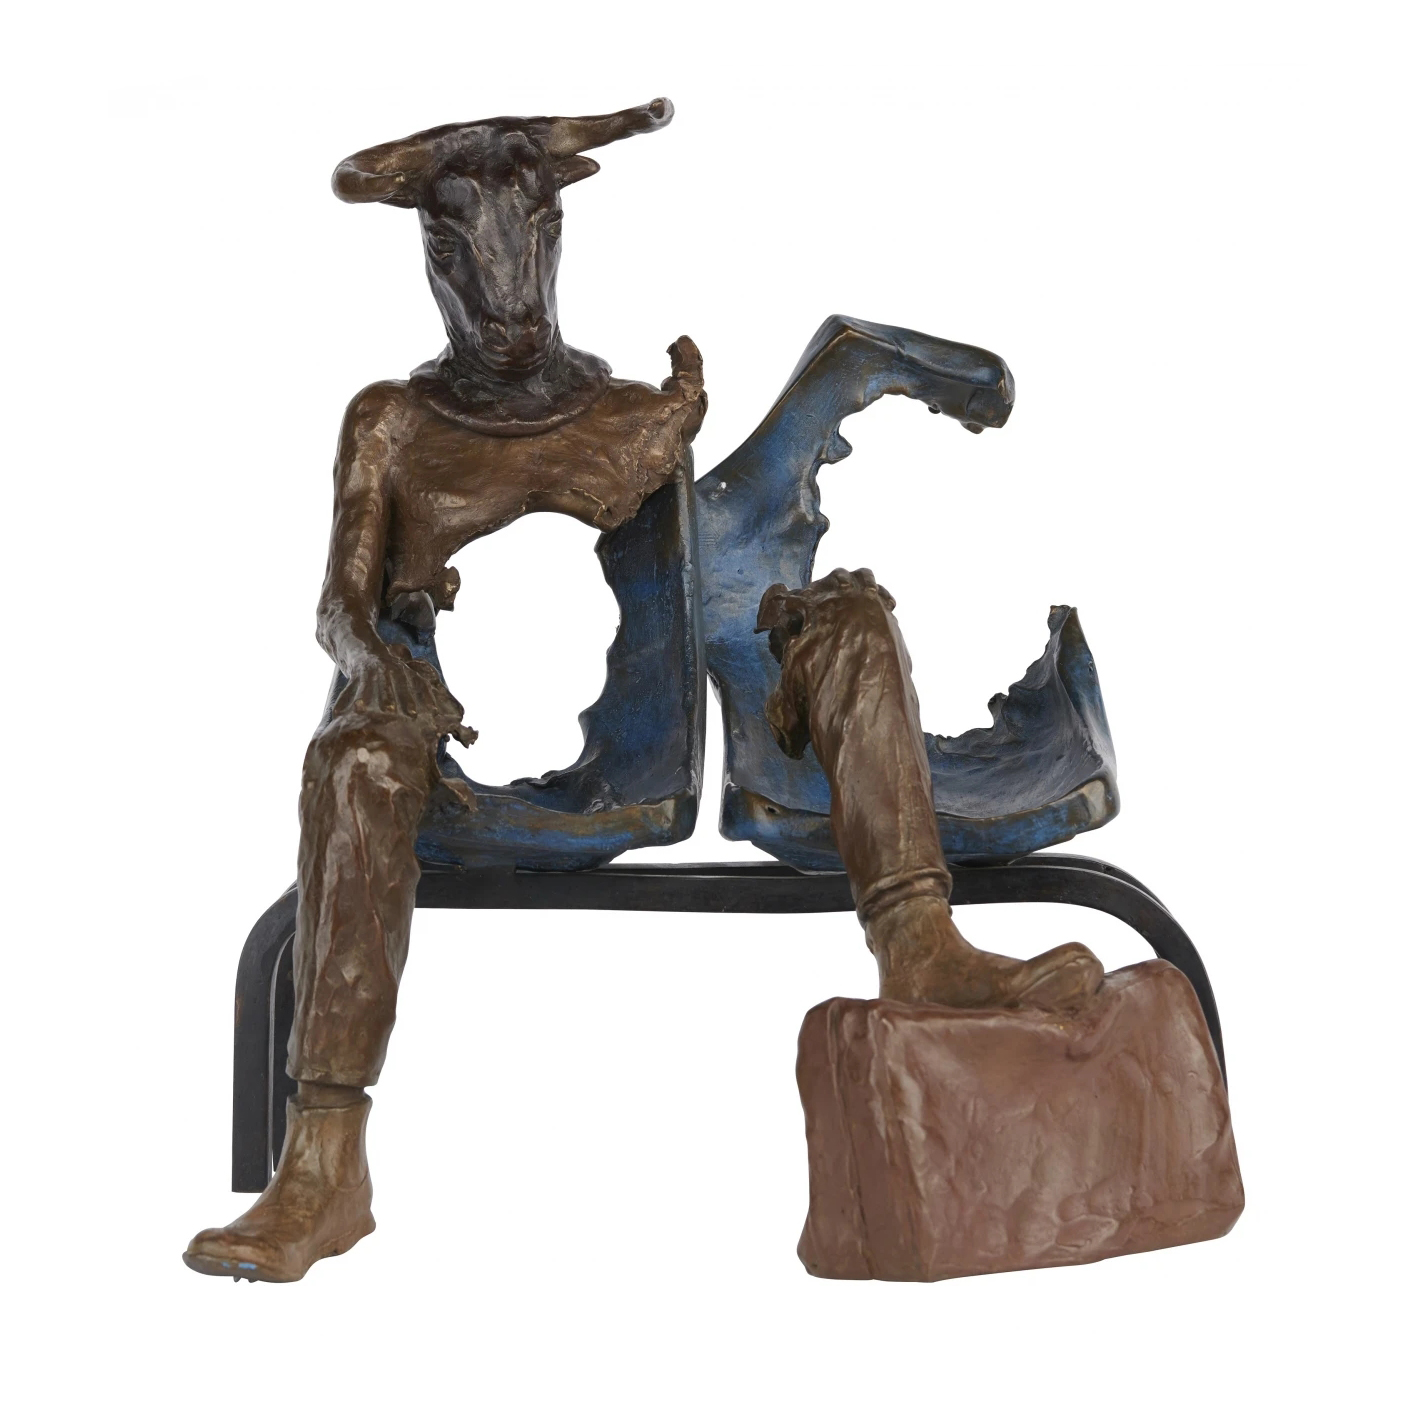 Brass Bull Figurine